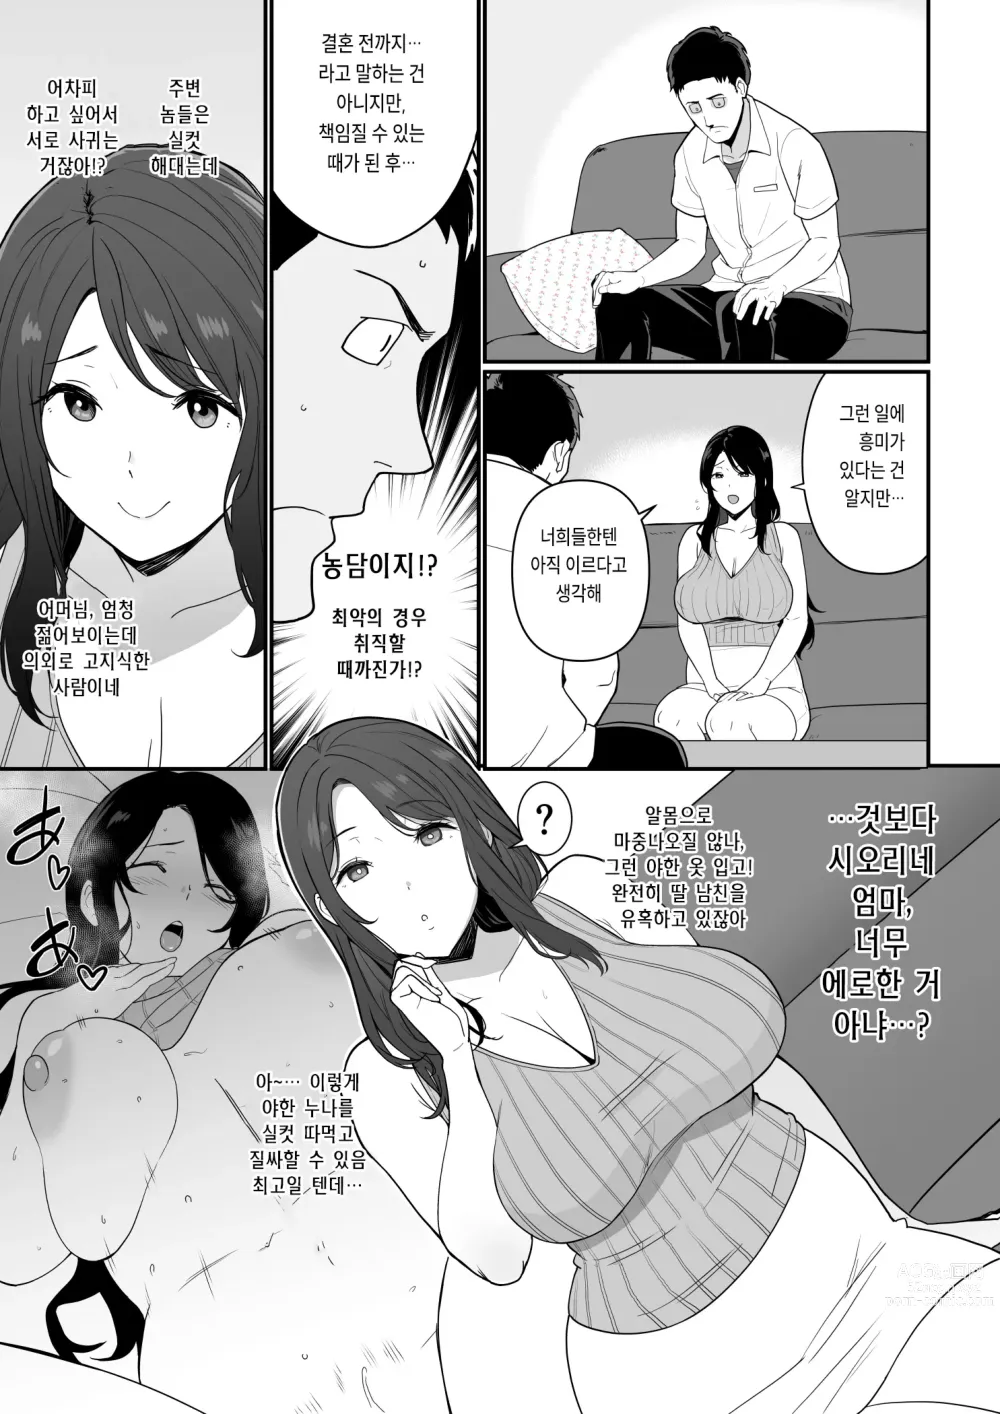 Page 6 of doujinshi 여친의 엄마가 너무 꼴려서 참을 수가 없다